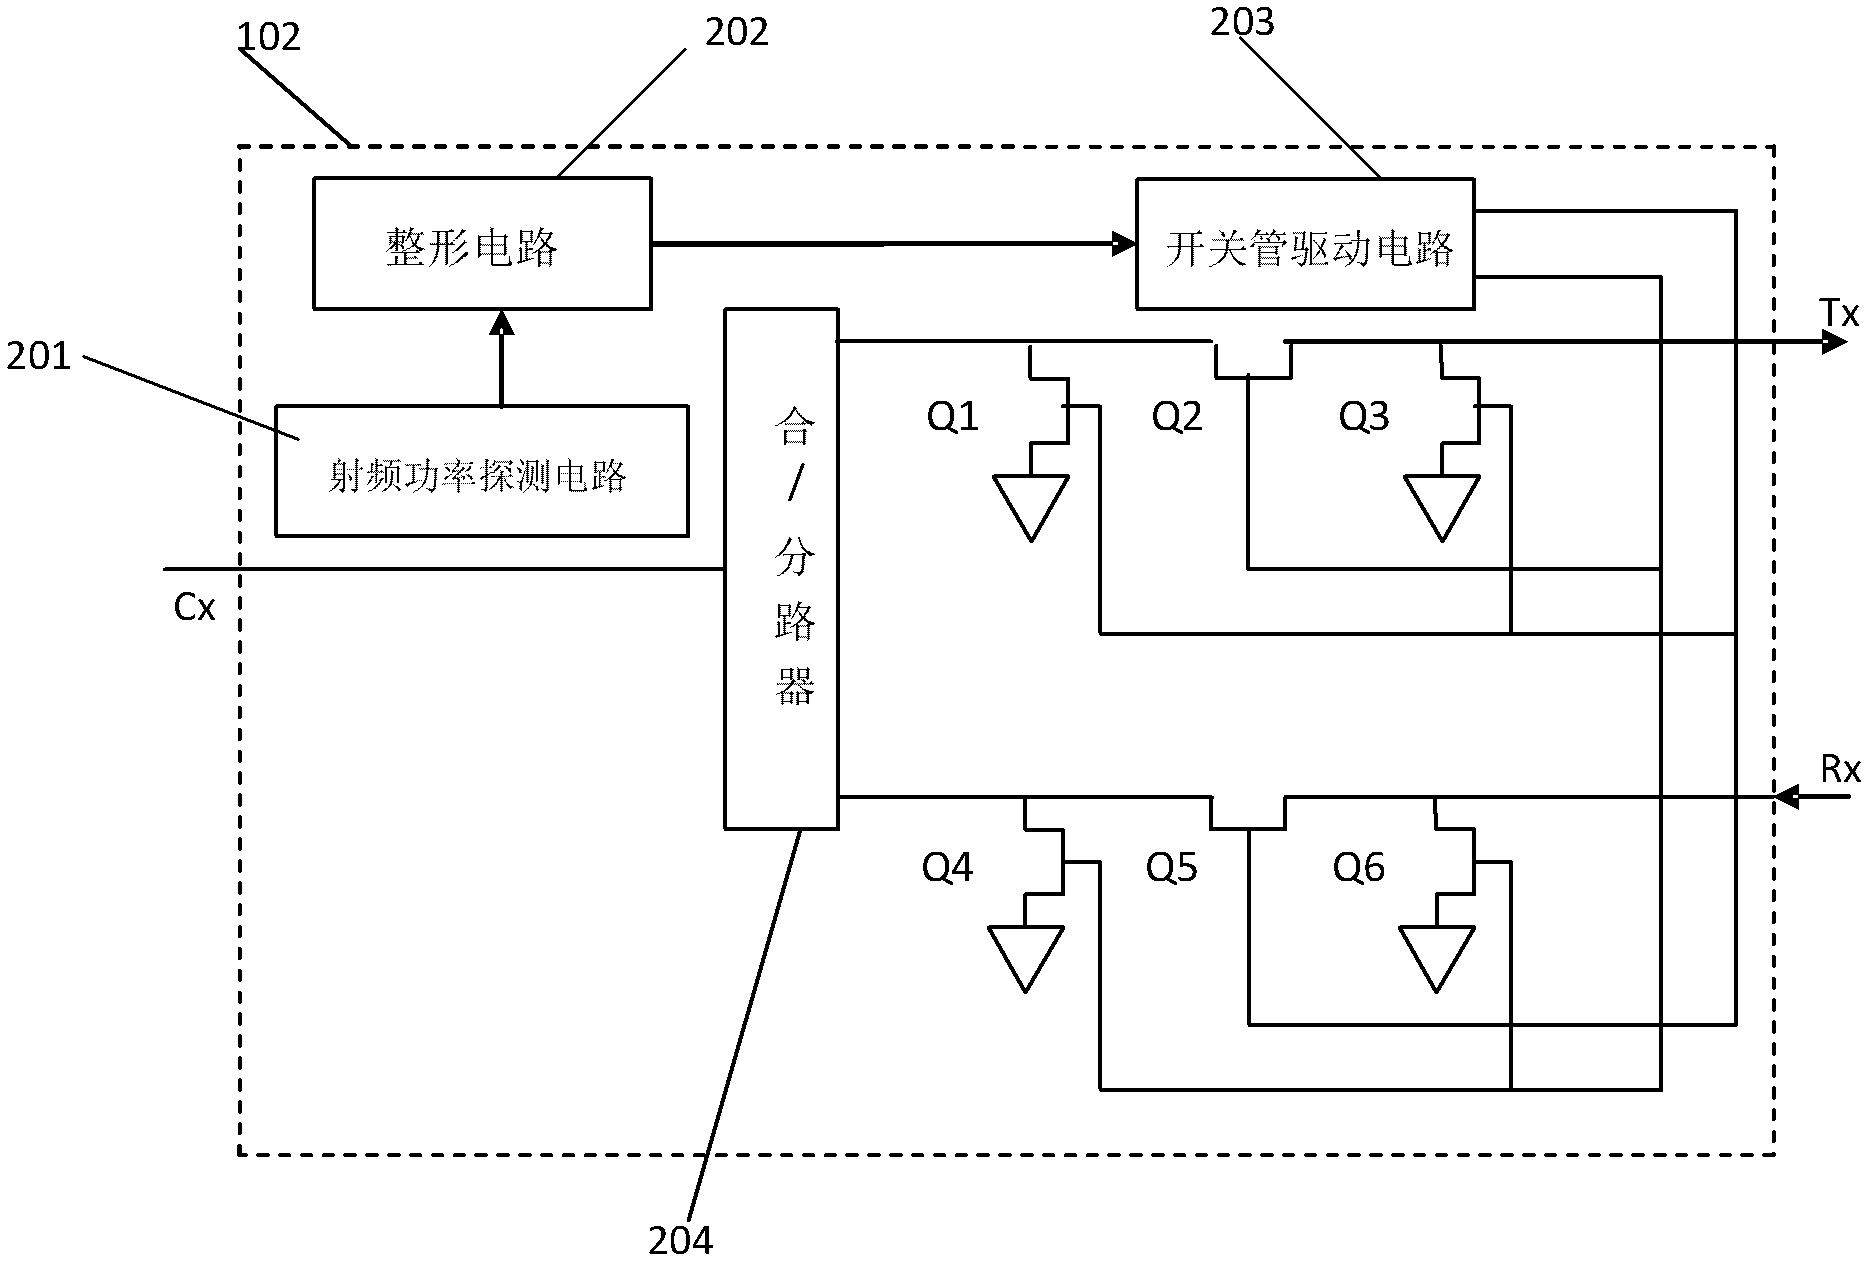 Radio-over-fiber switching system